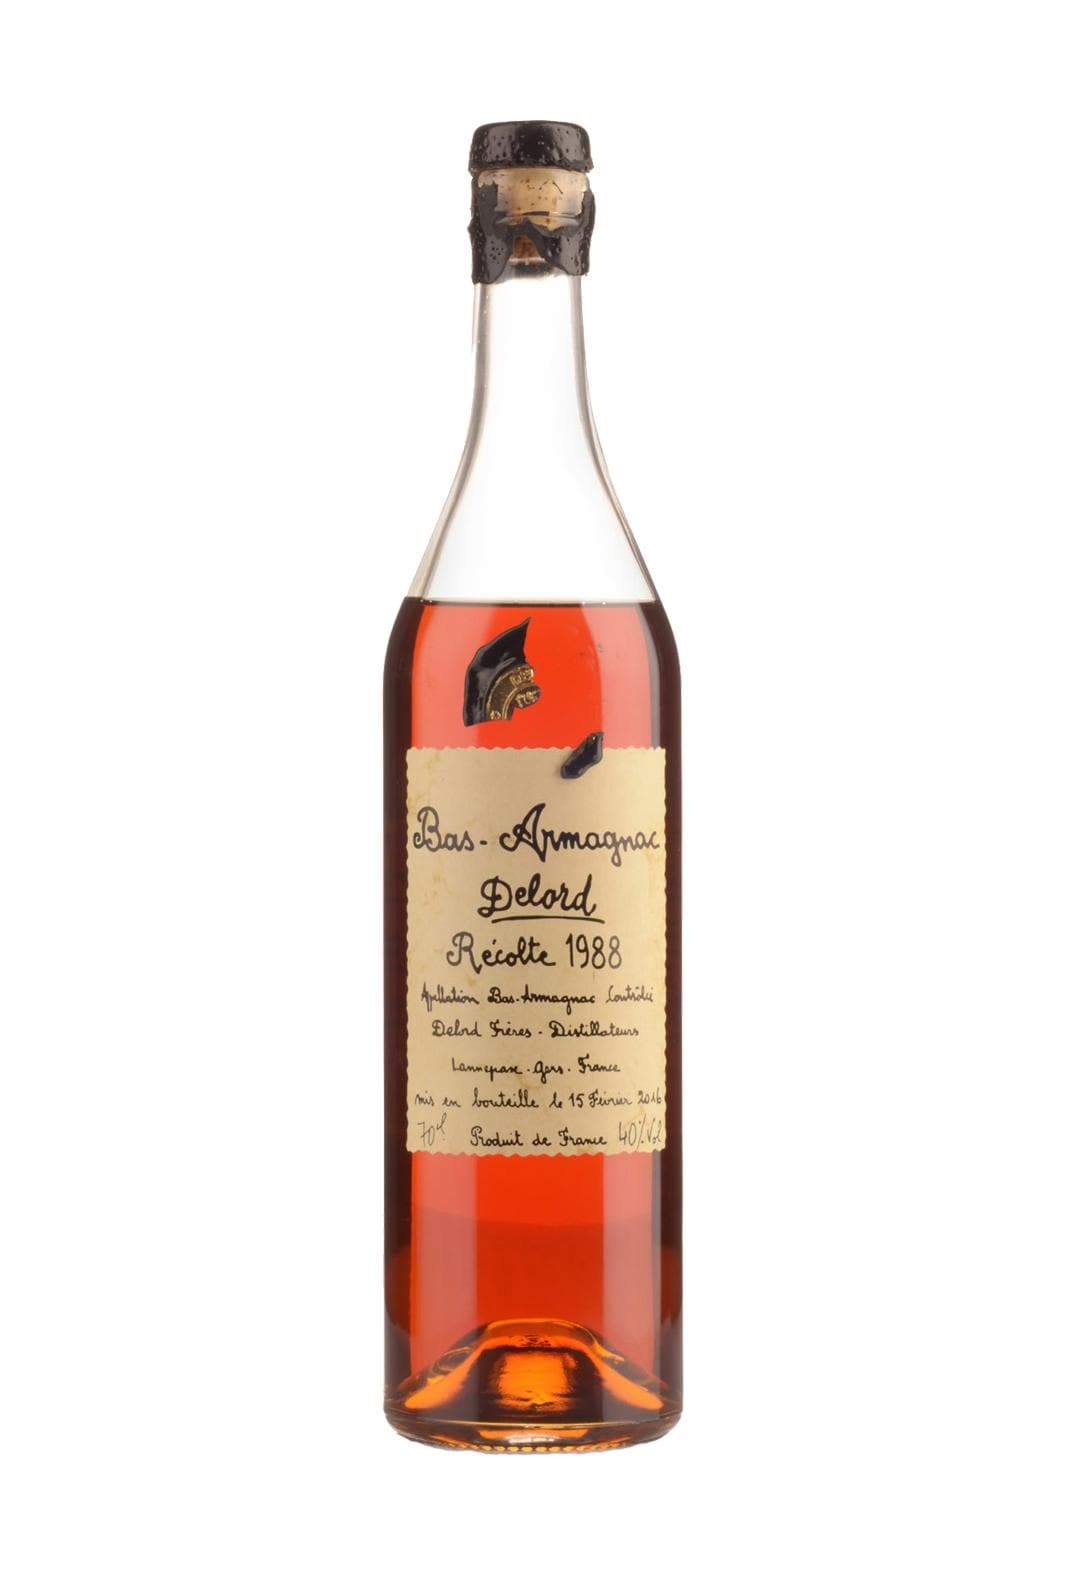 Delord 1988 Bas Armagnac 40% 700ml | Brandy | Shop online at Spirits of France